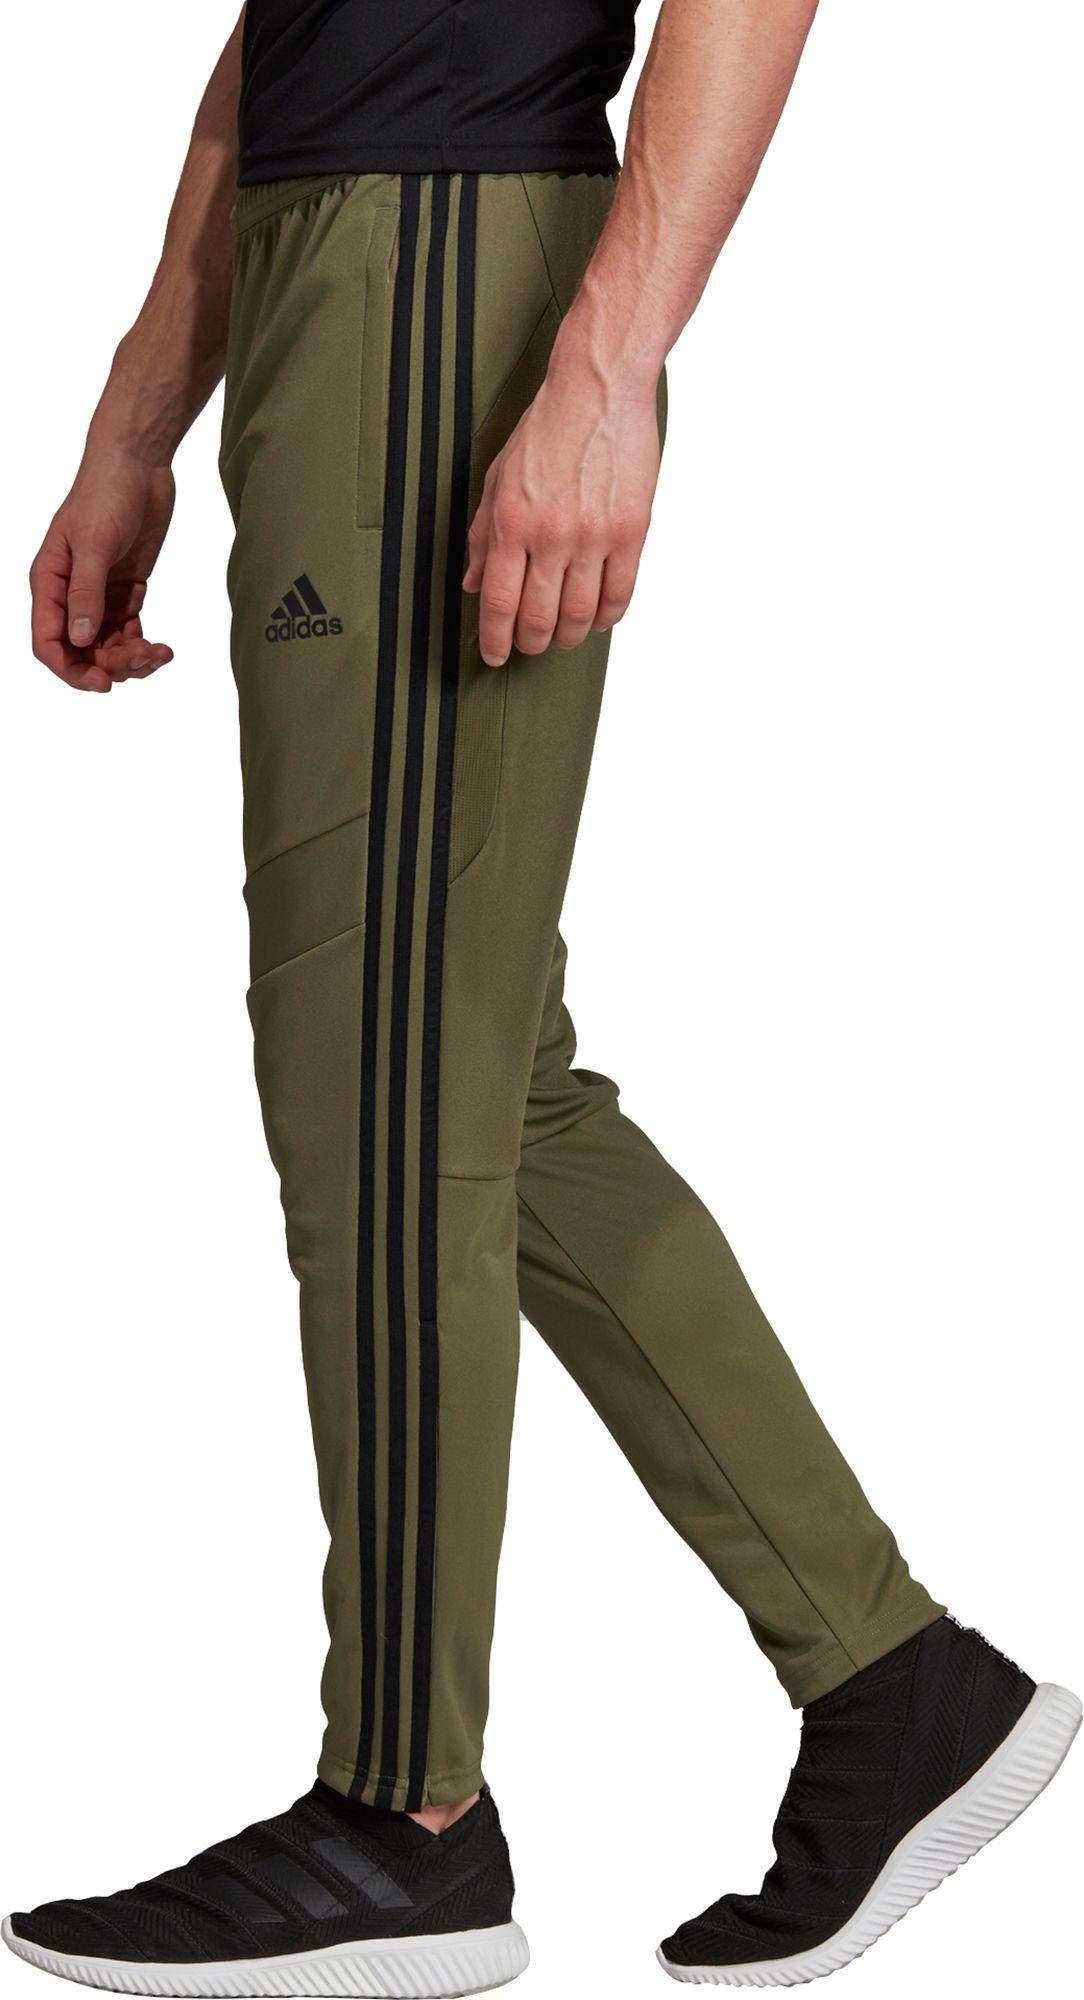 Adidas Tiro 19 Training Pants In Green For Men - Lyst-3915